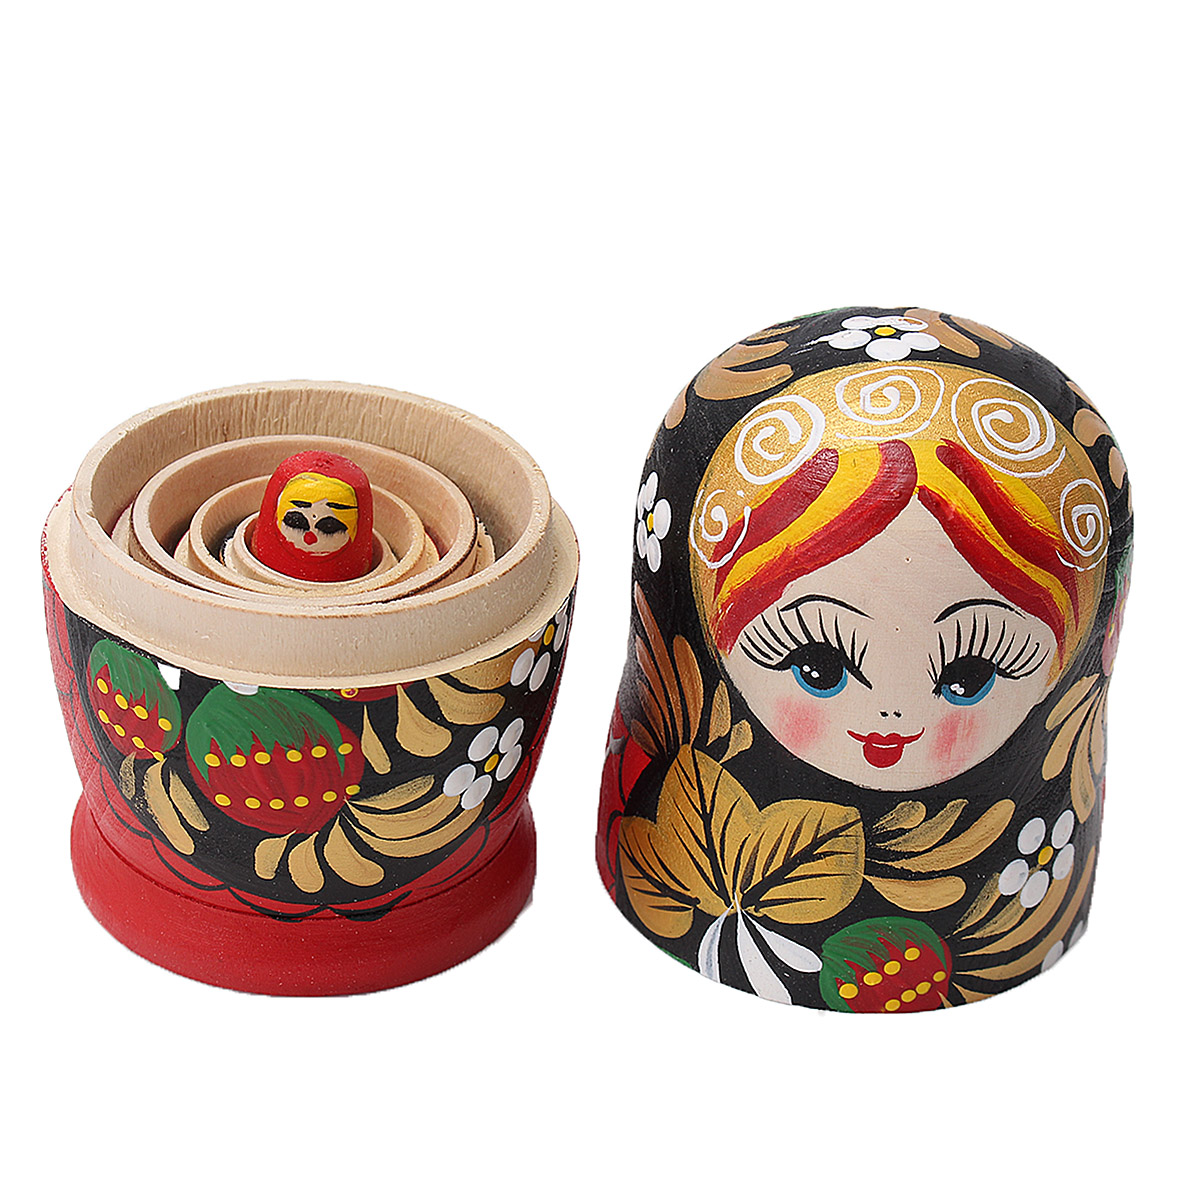 5PCSSet-Wooden-Doll-Matryoshka-Nesting-Russian-Babushka-Toy-Gift-Decor-Collection-1182666-5